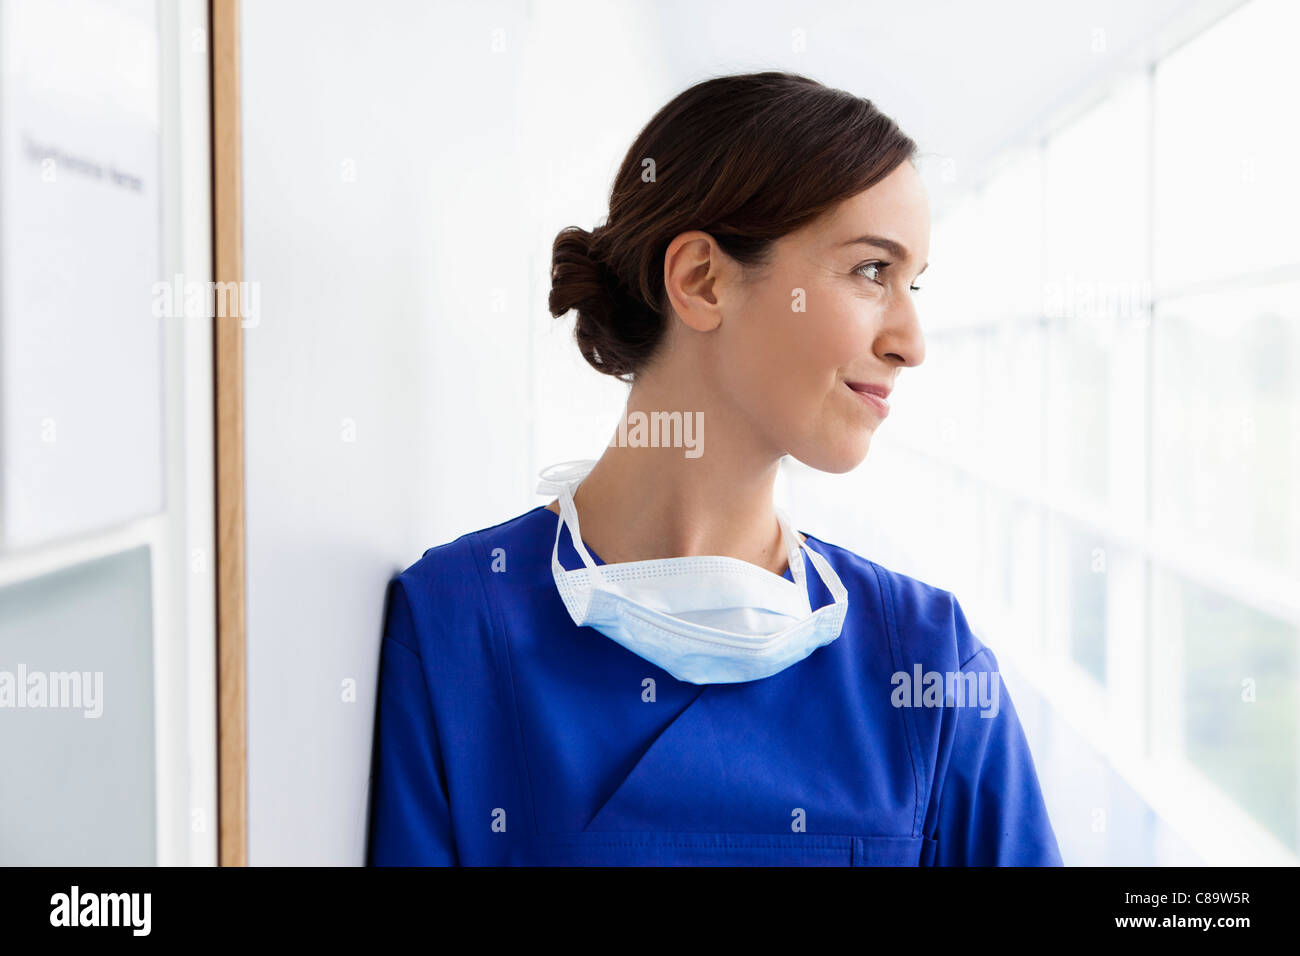 Alemania, Baviera, Diessen am Ammersee, joven doctora en scrubs, sonriendo Foto de stock